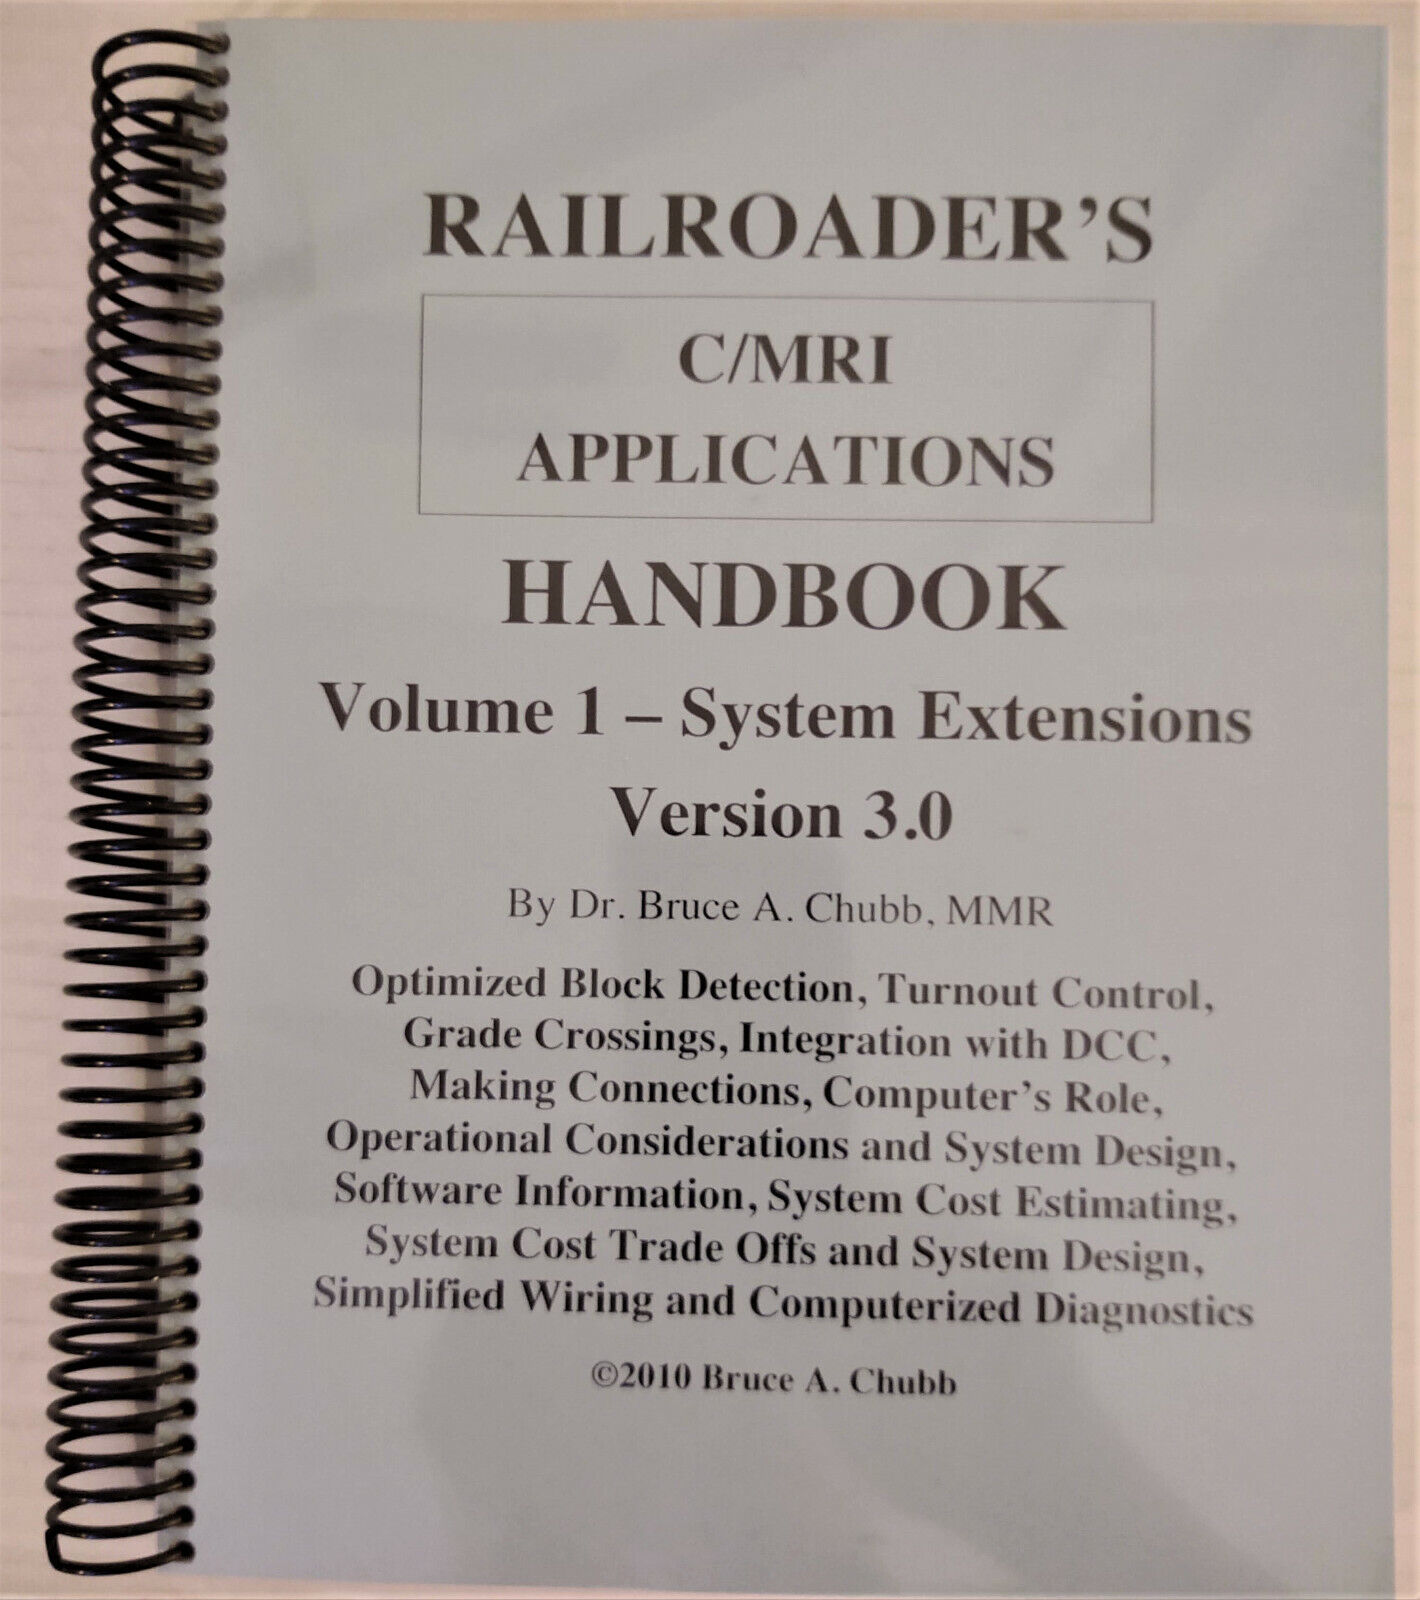 RAILROADER'S HANDBOOK (C/MRI Applications) Volume 1 System Extensions 2010